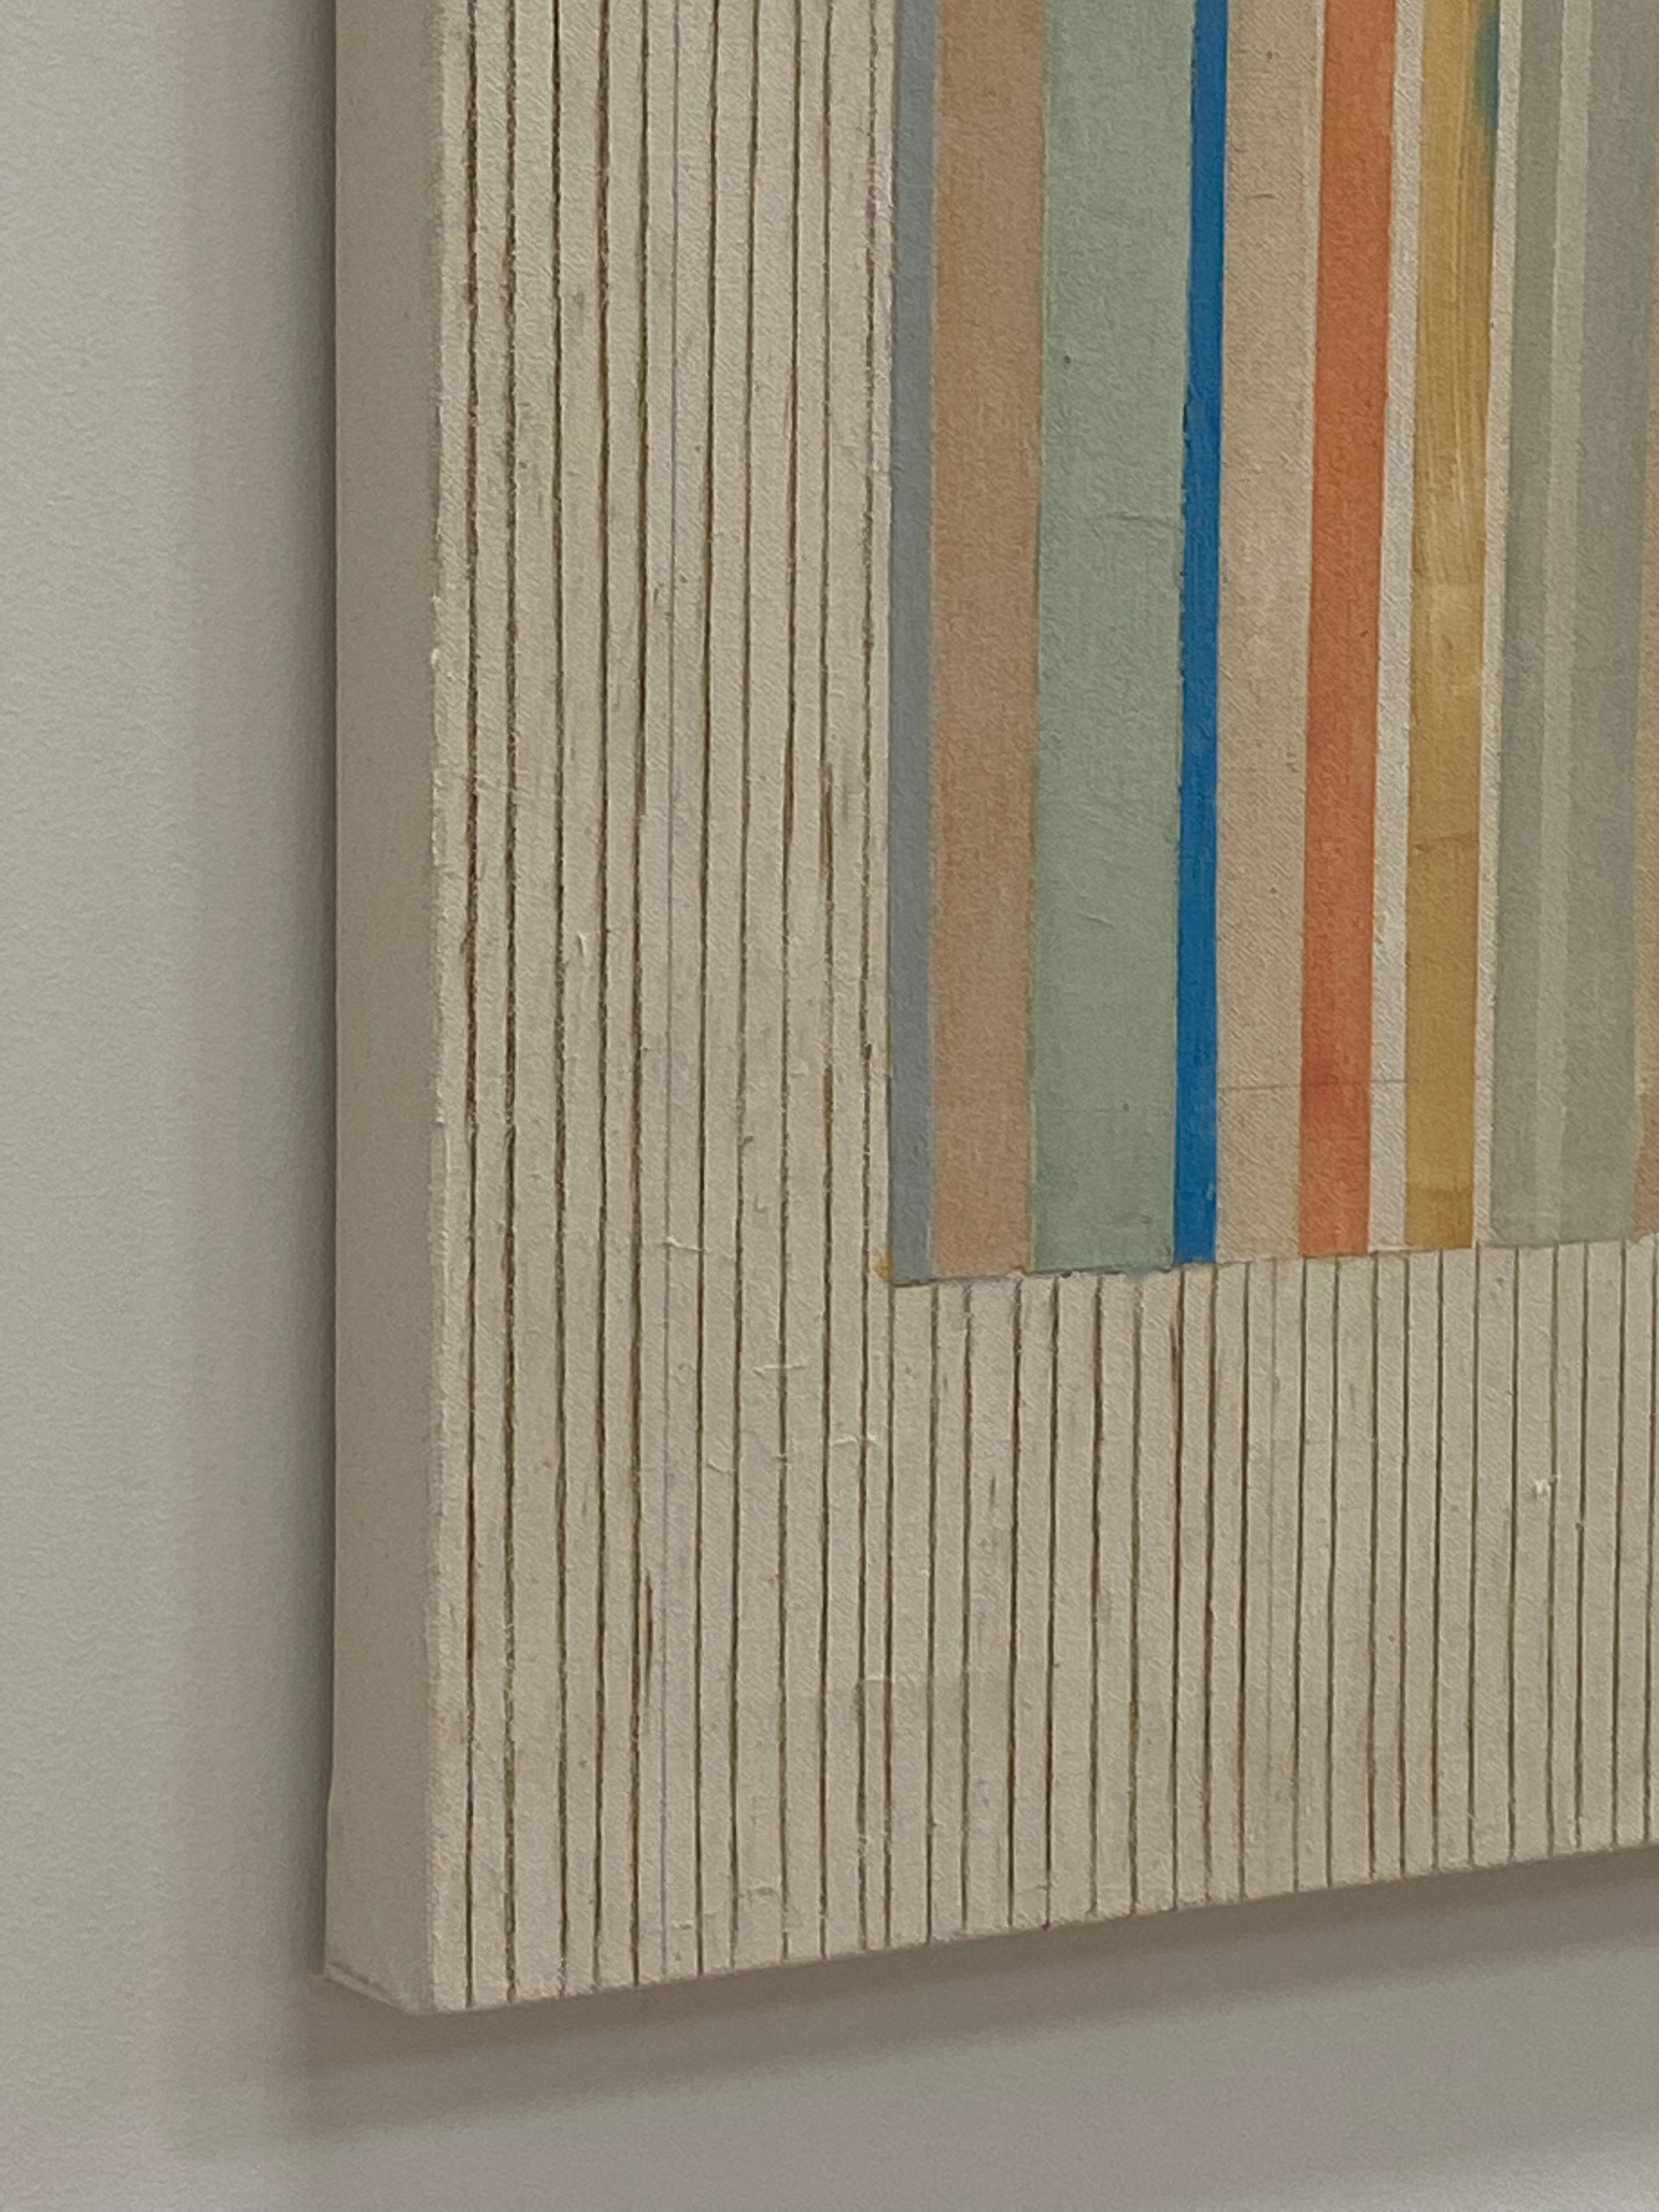 Primrosegrey, Beige, Orange, Gray Blue, Yellow Stripes Geometric Abstract - Contemporary Painting by Elizabeth Gourlay